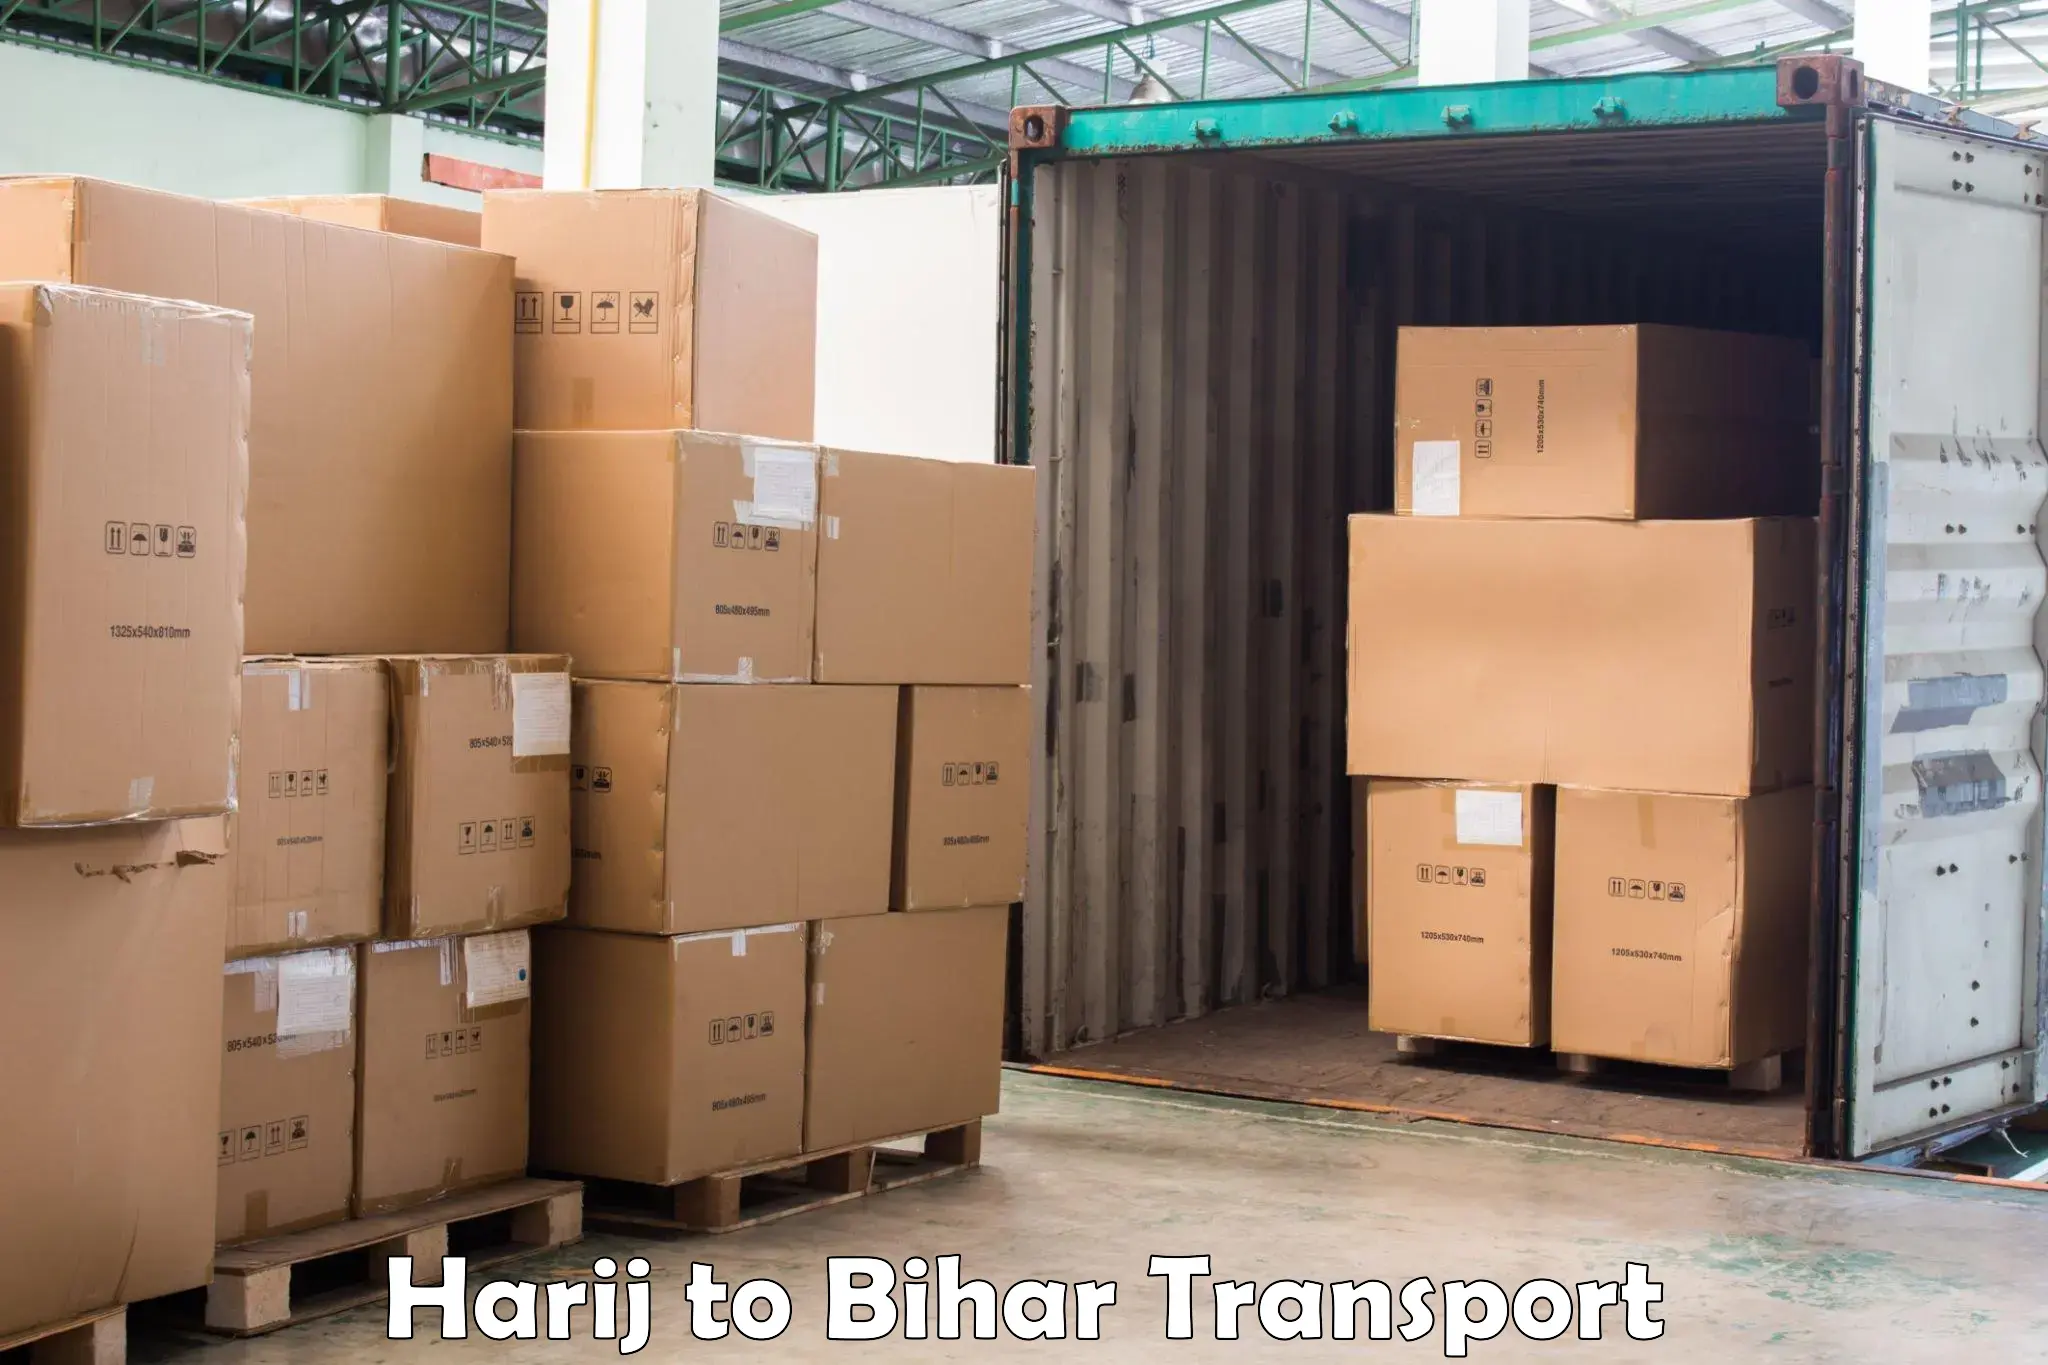 Daily parcel service transport Harij to Fatwah